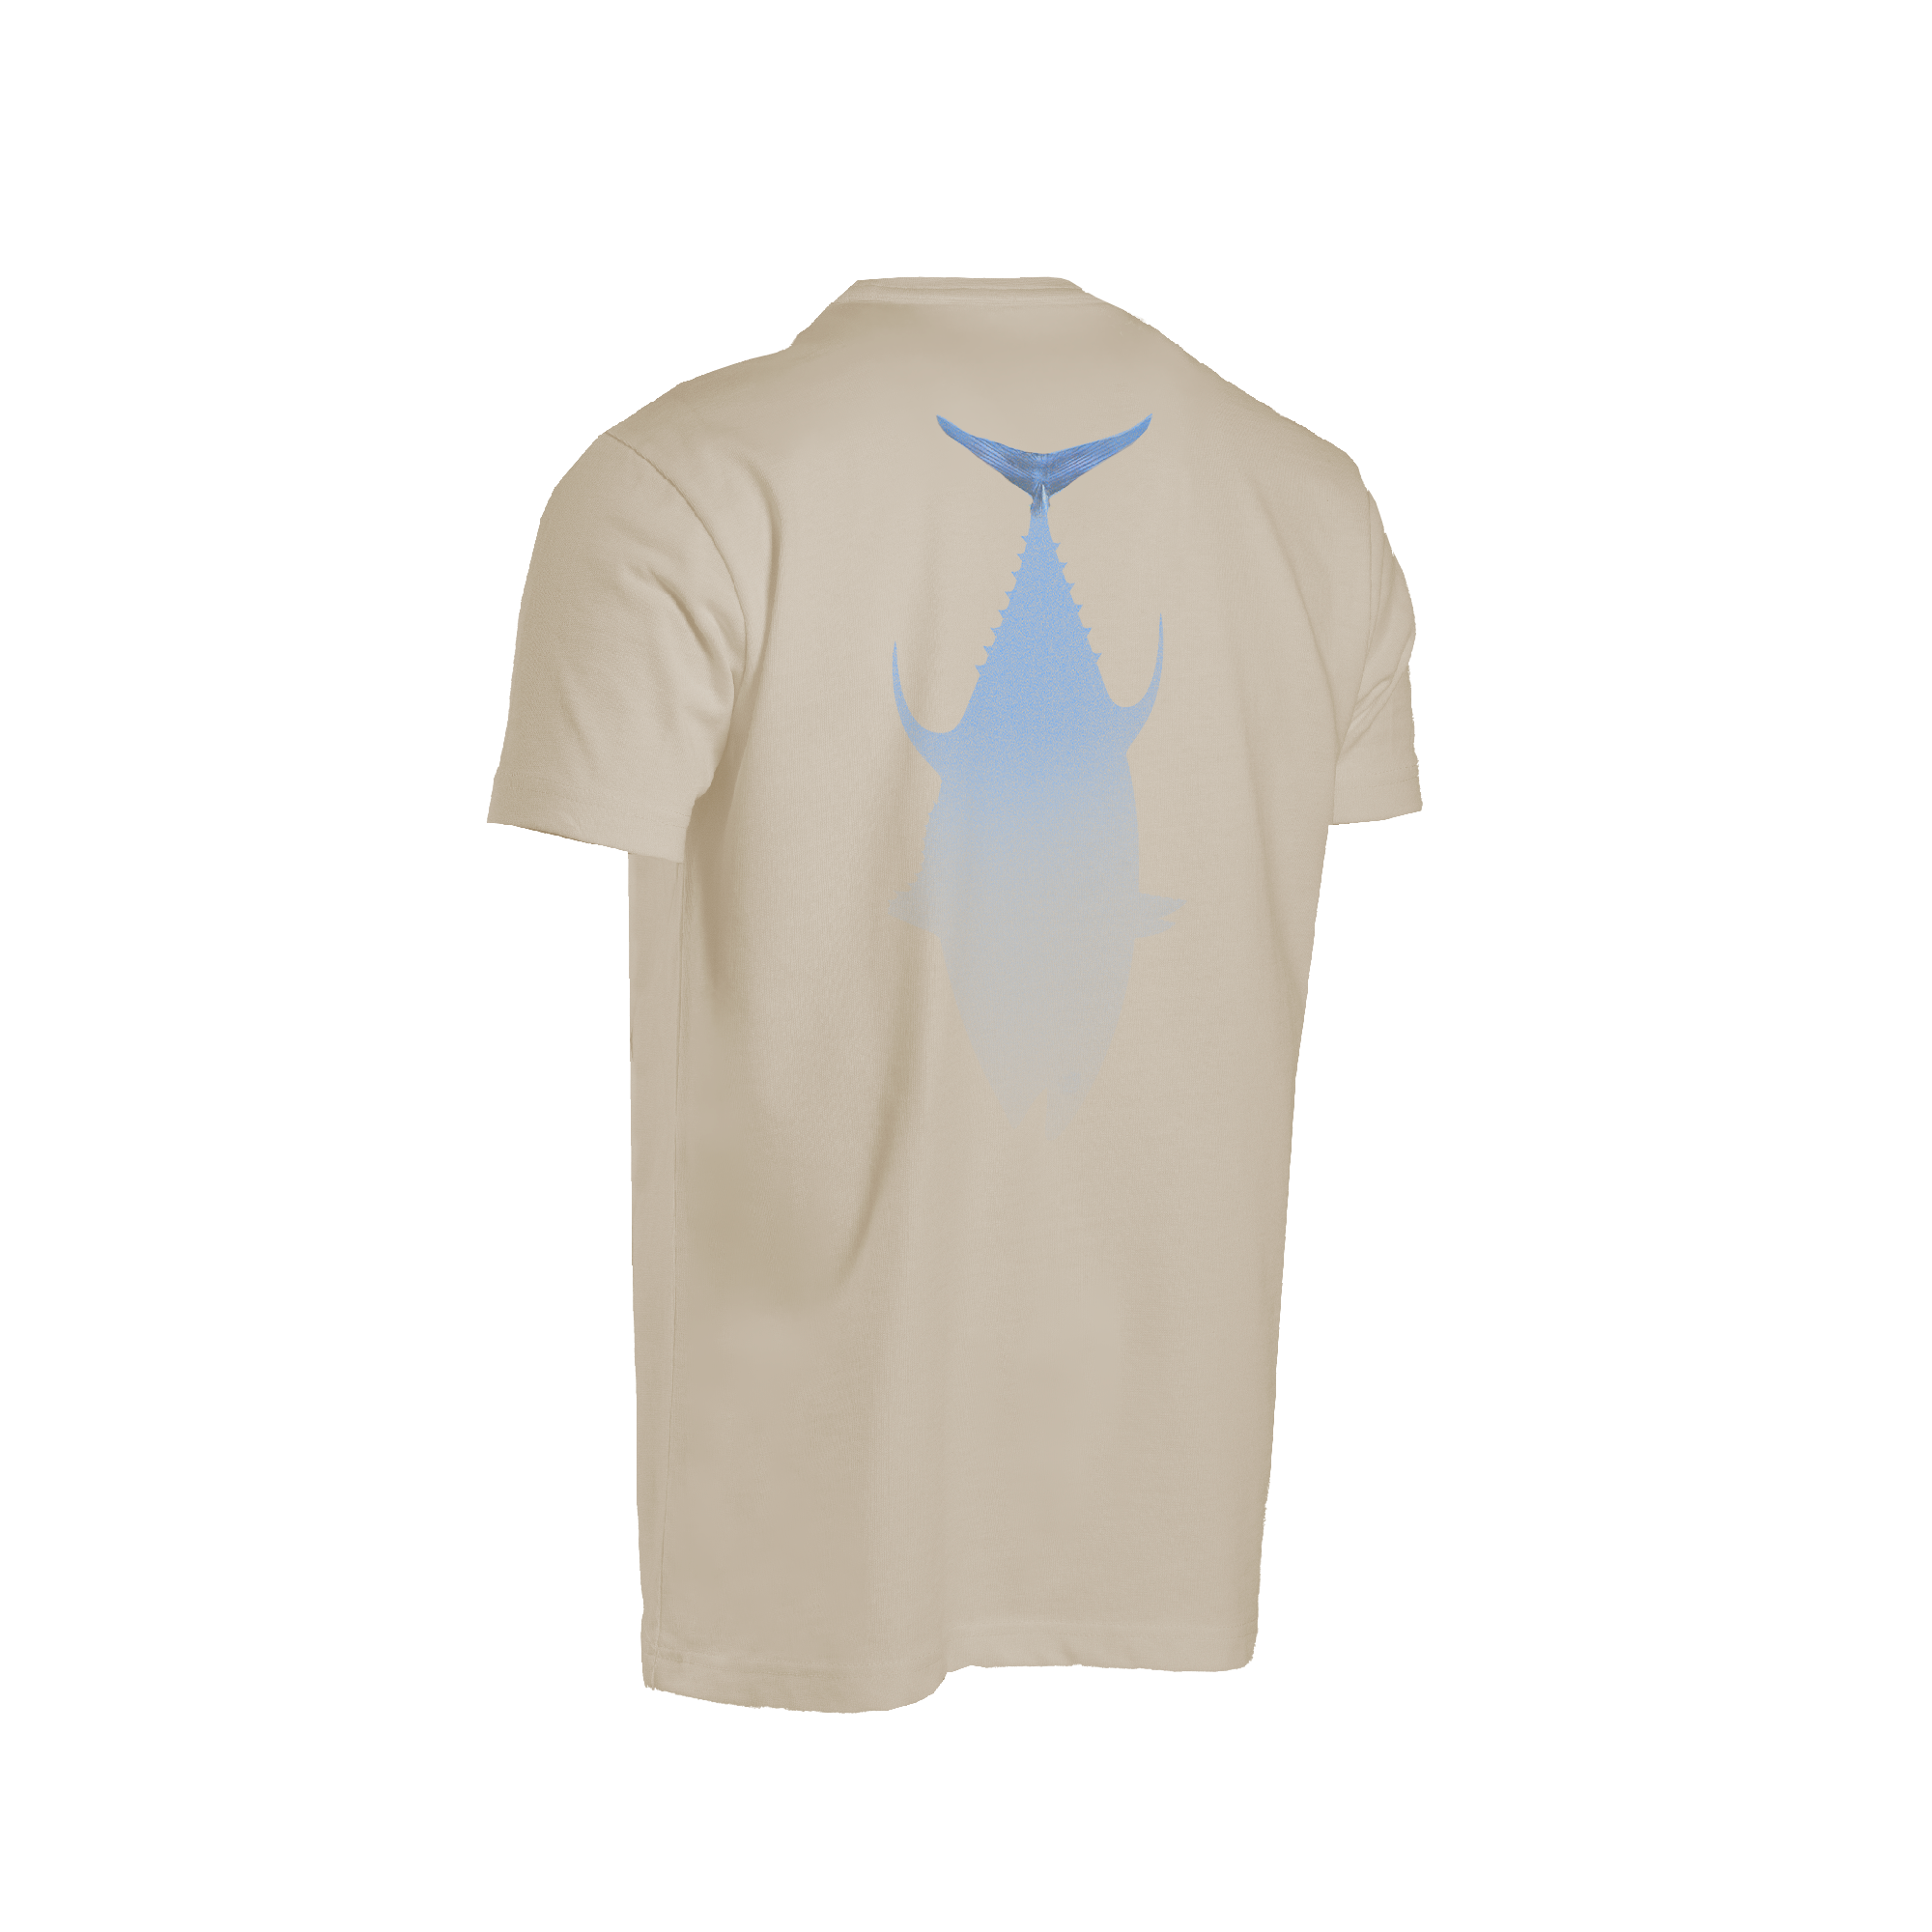 Graphite Kısa Kollu Bisiklet Yaka T-Shirt Mavi Yüzgeç Ton Balığı Desenli